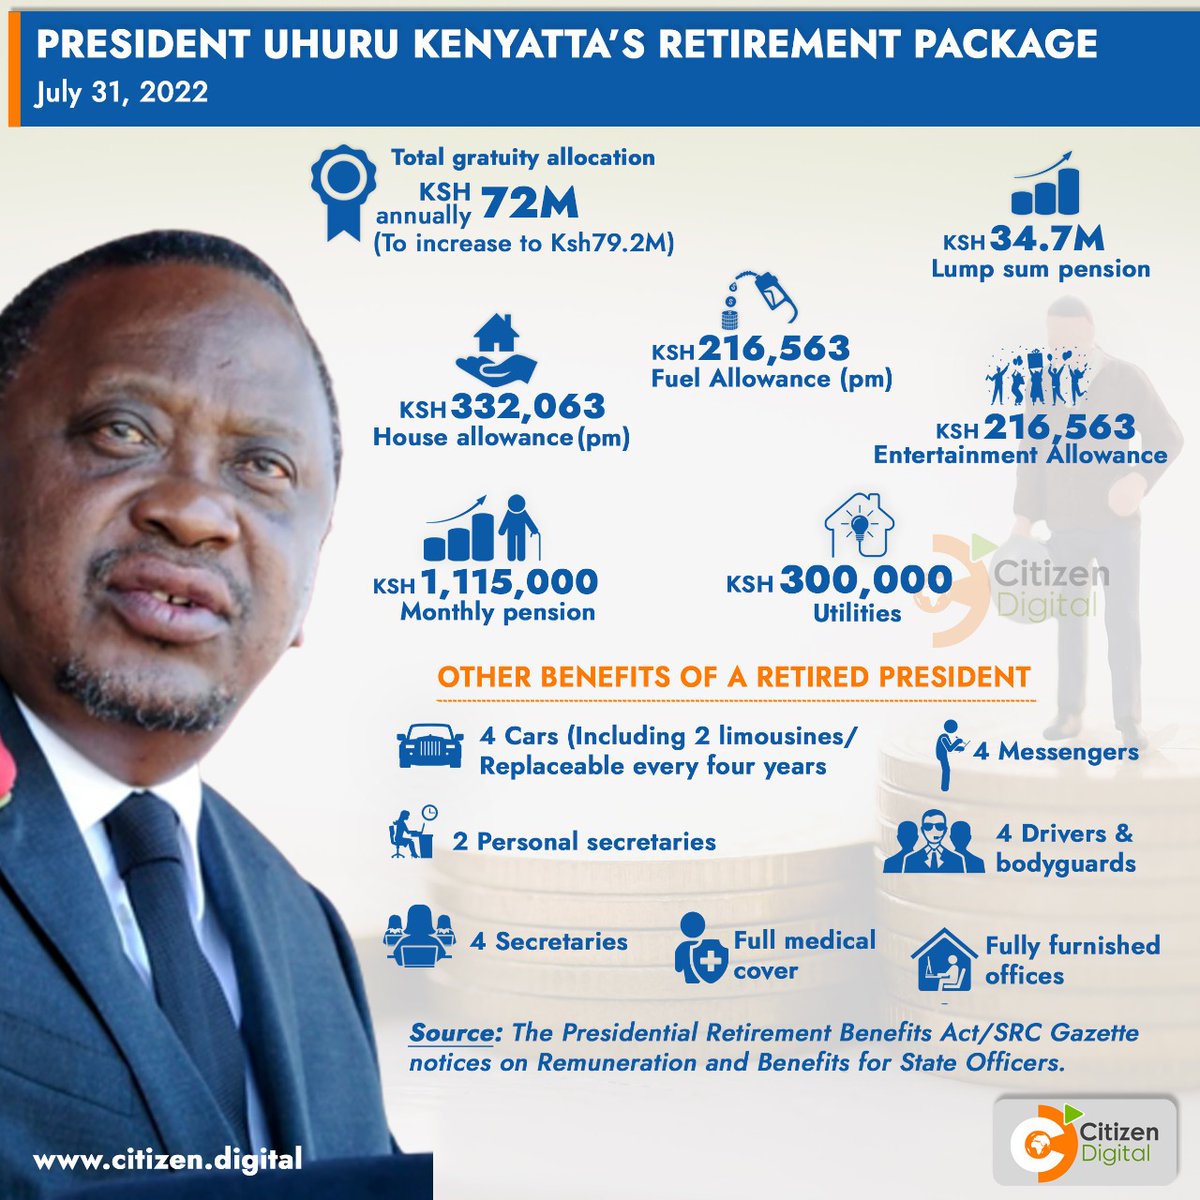 President Uhuru Kenyatta's retirement package